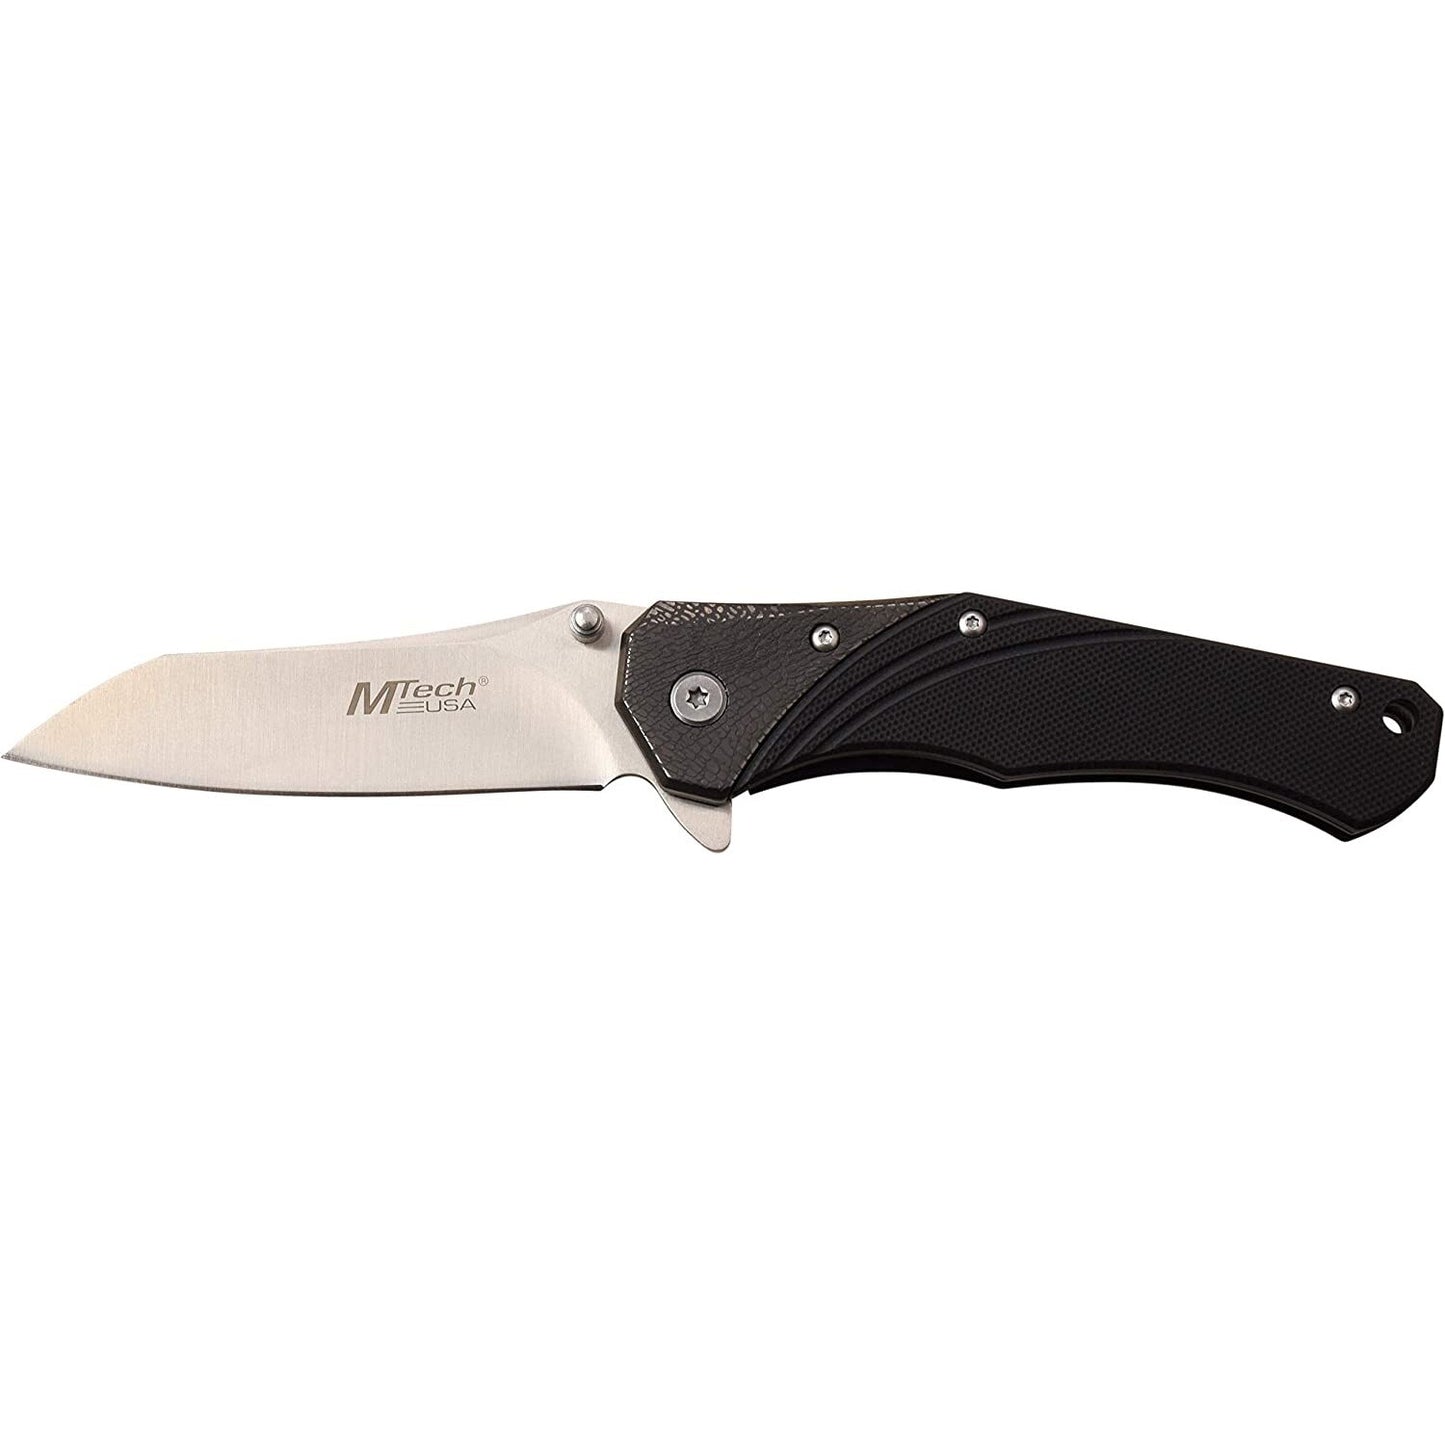 Mtech Mtech Sheepsfoot Fine Edge Blade Folding Pocket Knife - 4.5 Inches G10 Handle #mt-1103Gy Dark Slate Gray